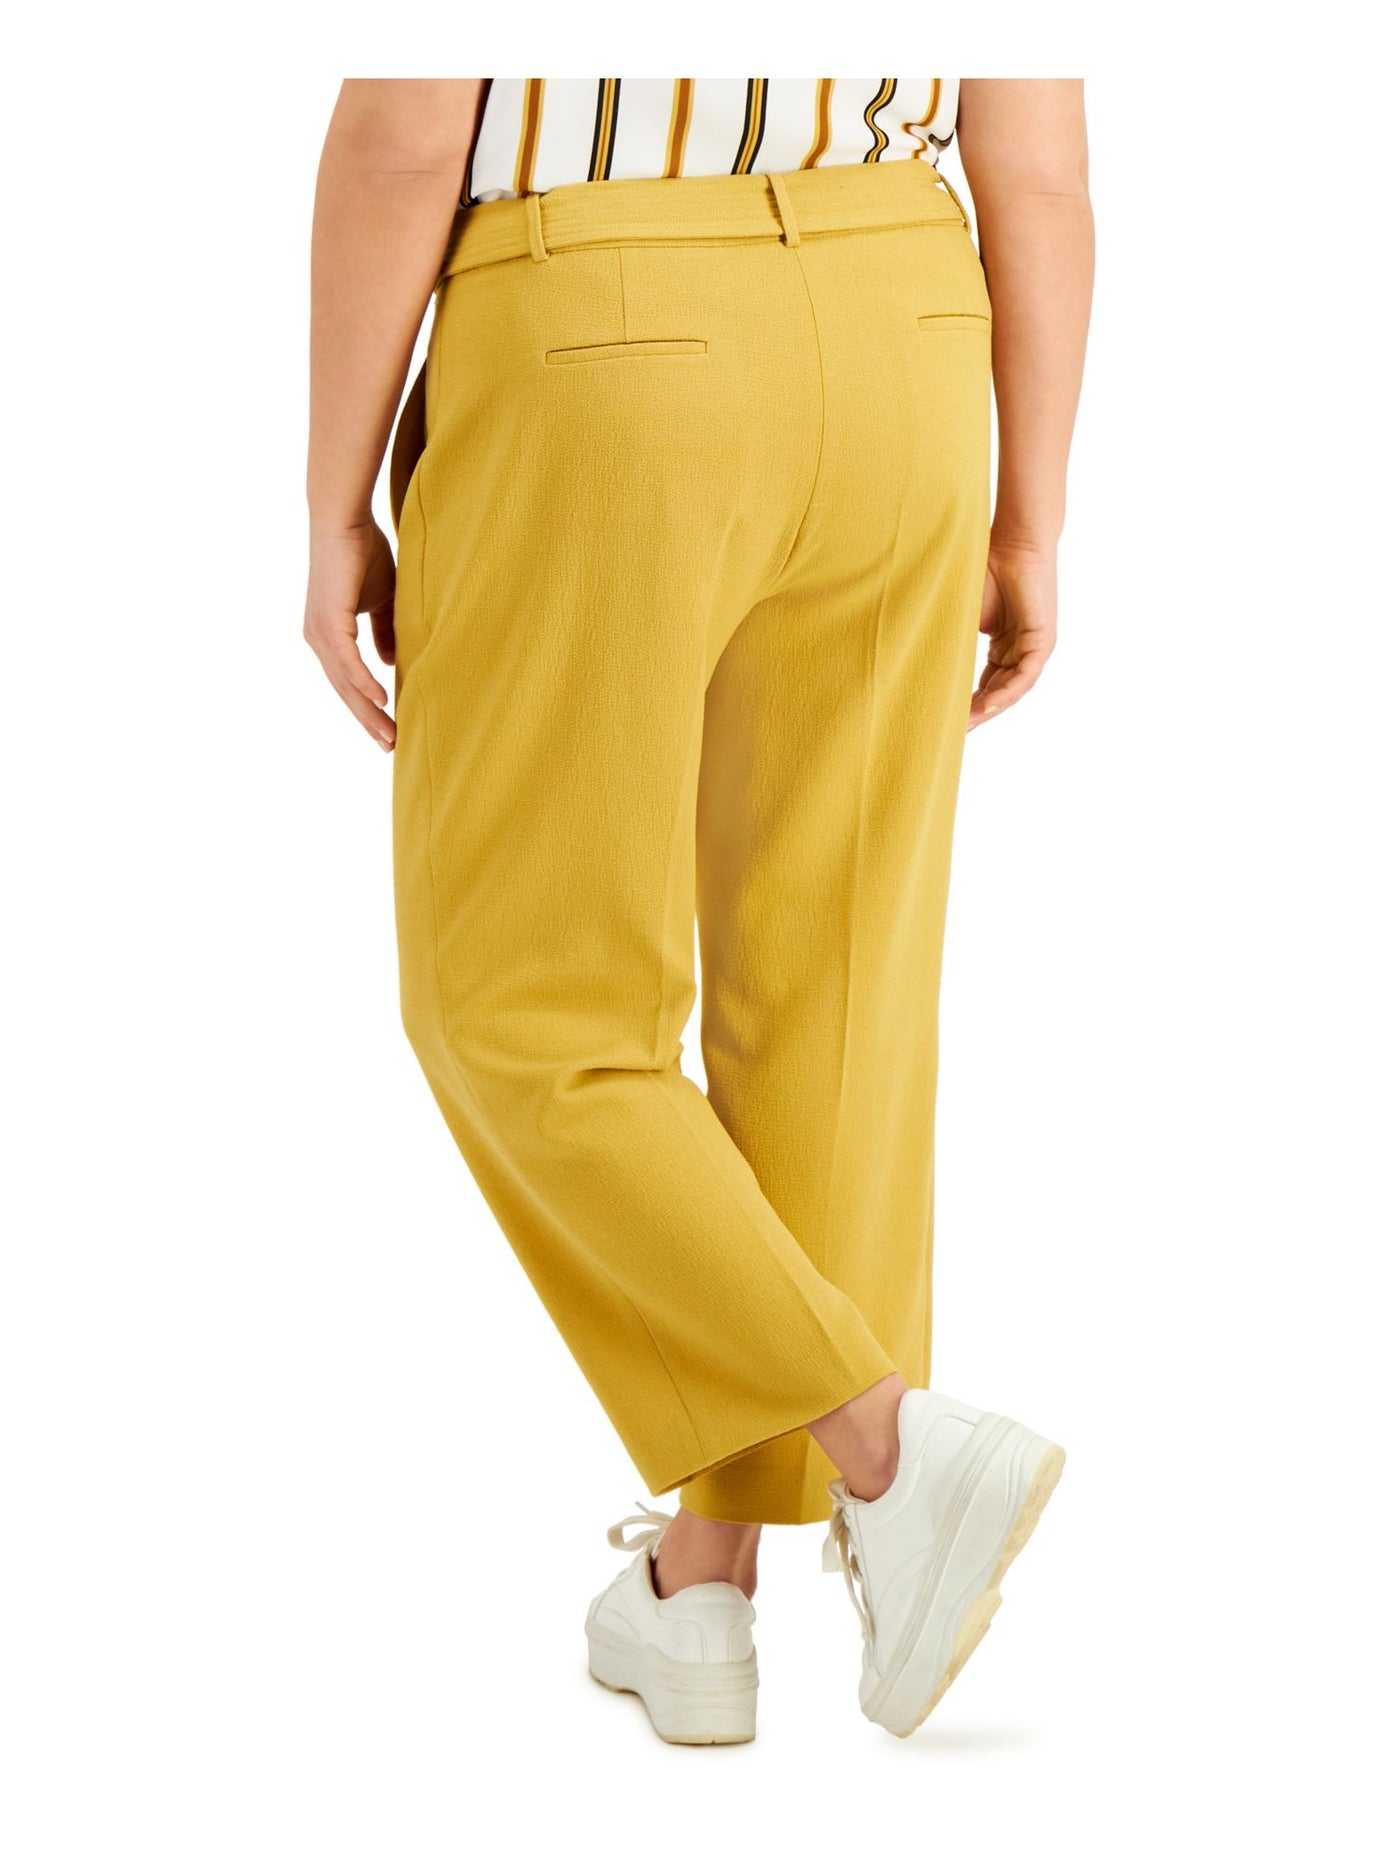 BAR III Womens Yellow Pocketed Zippered Wide Leg Pants Plus 22W